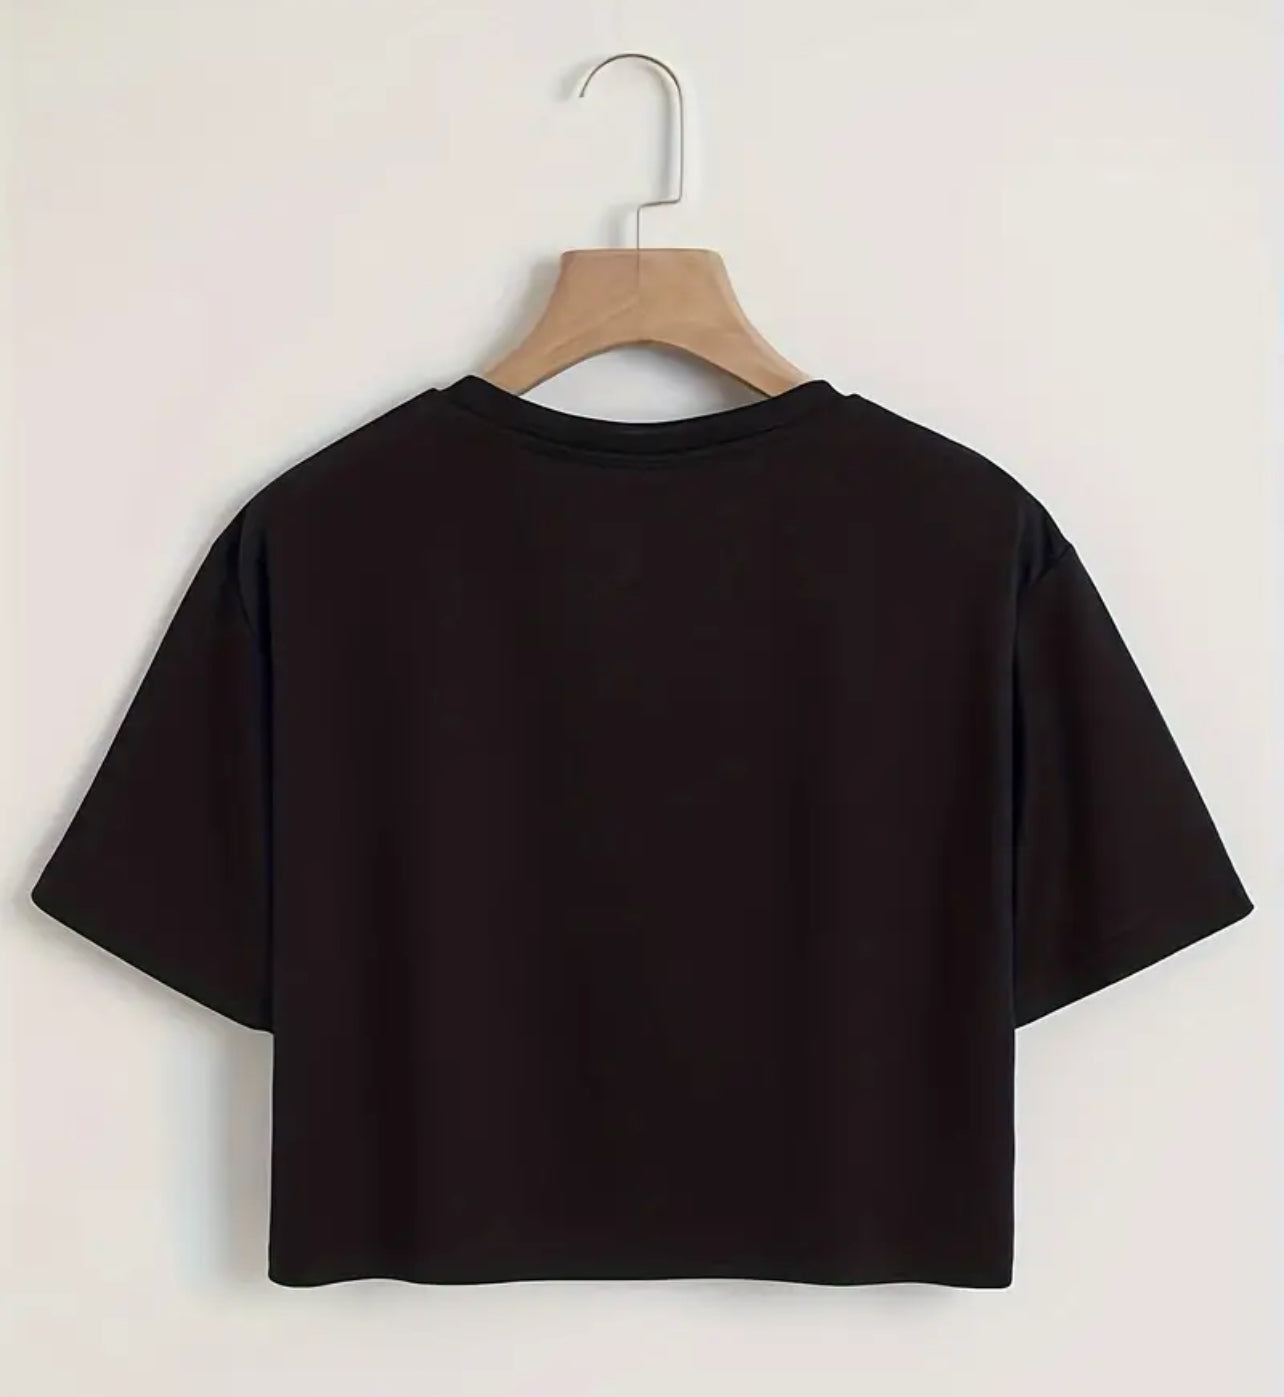 Los Angeles, Posh 💋 T-shirt, Casual Short Sleeve Crew Neck Crop Top